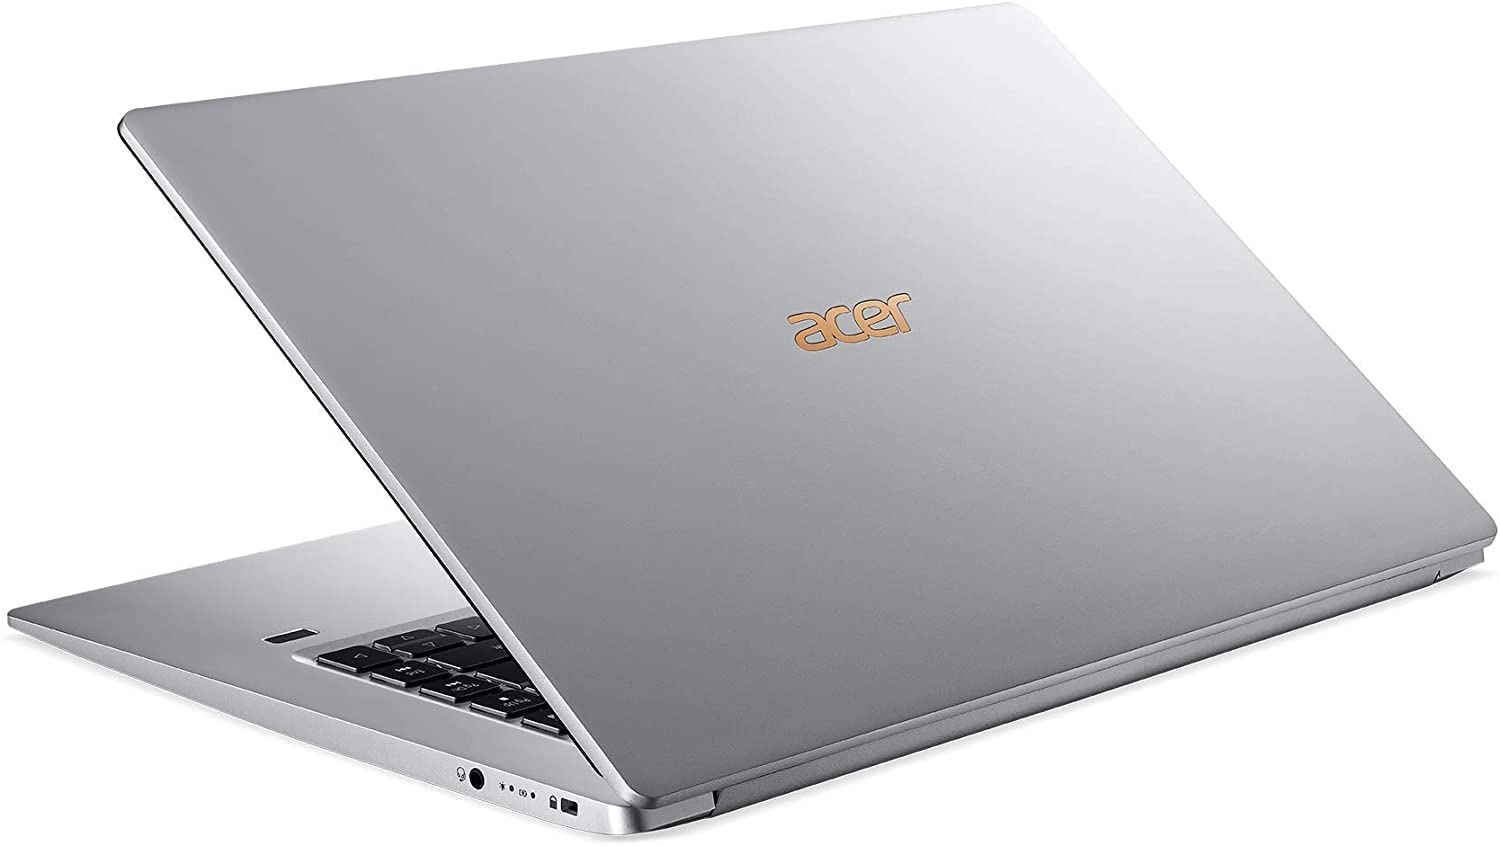 Acer SF515-51T-507P laptop image